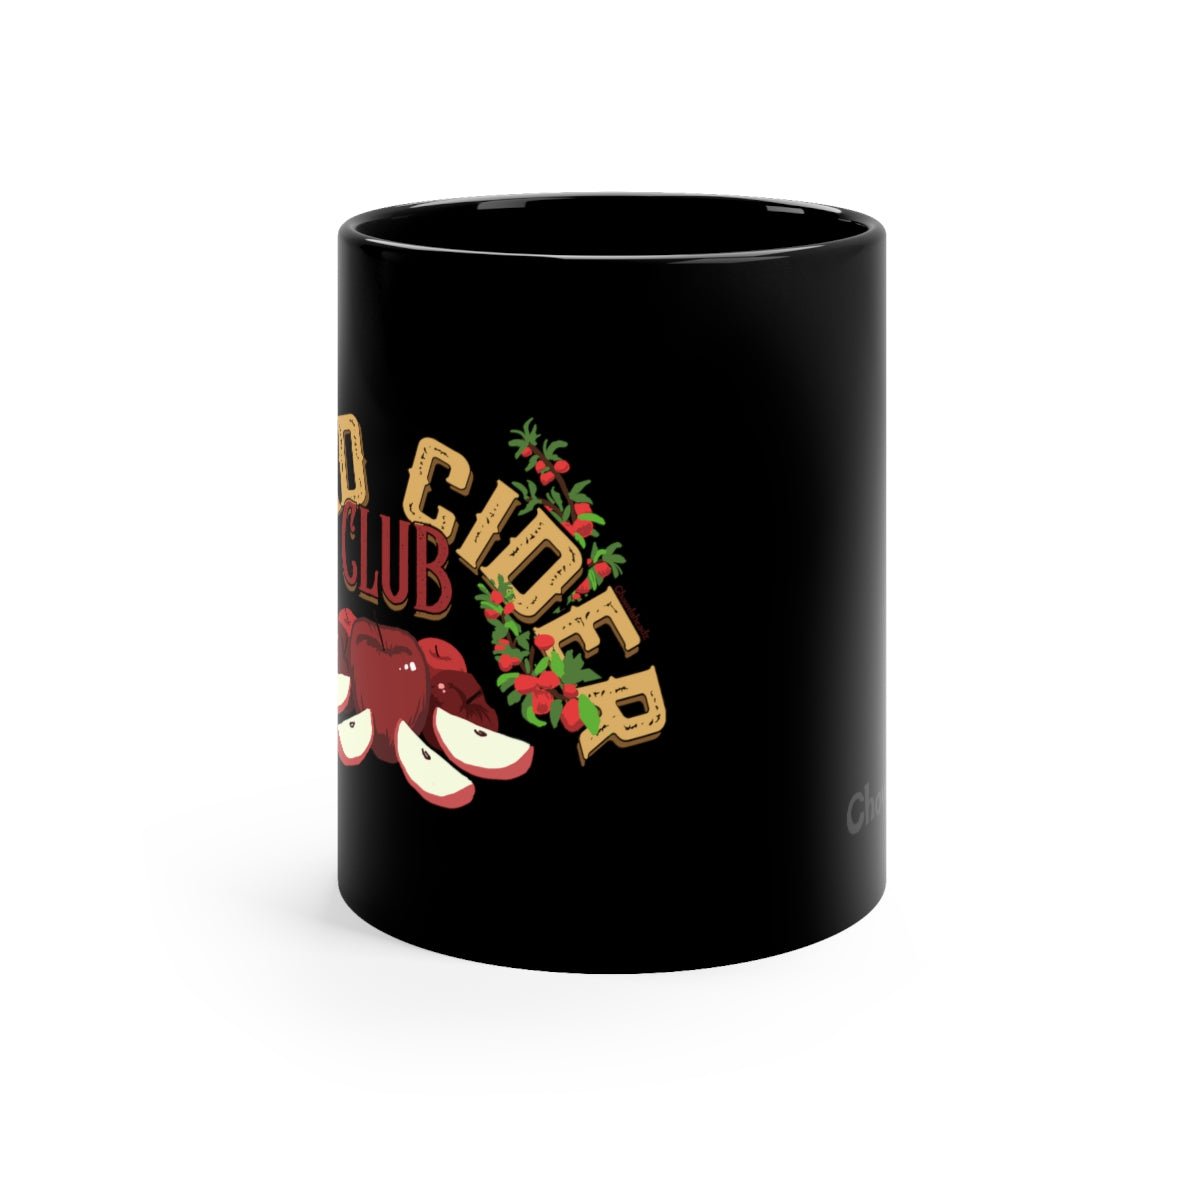 Hard Cider Club 11oz Coffee Mug - Chowdaheadz